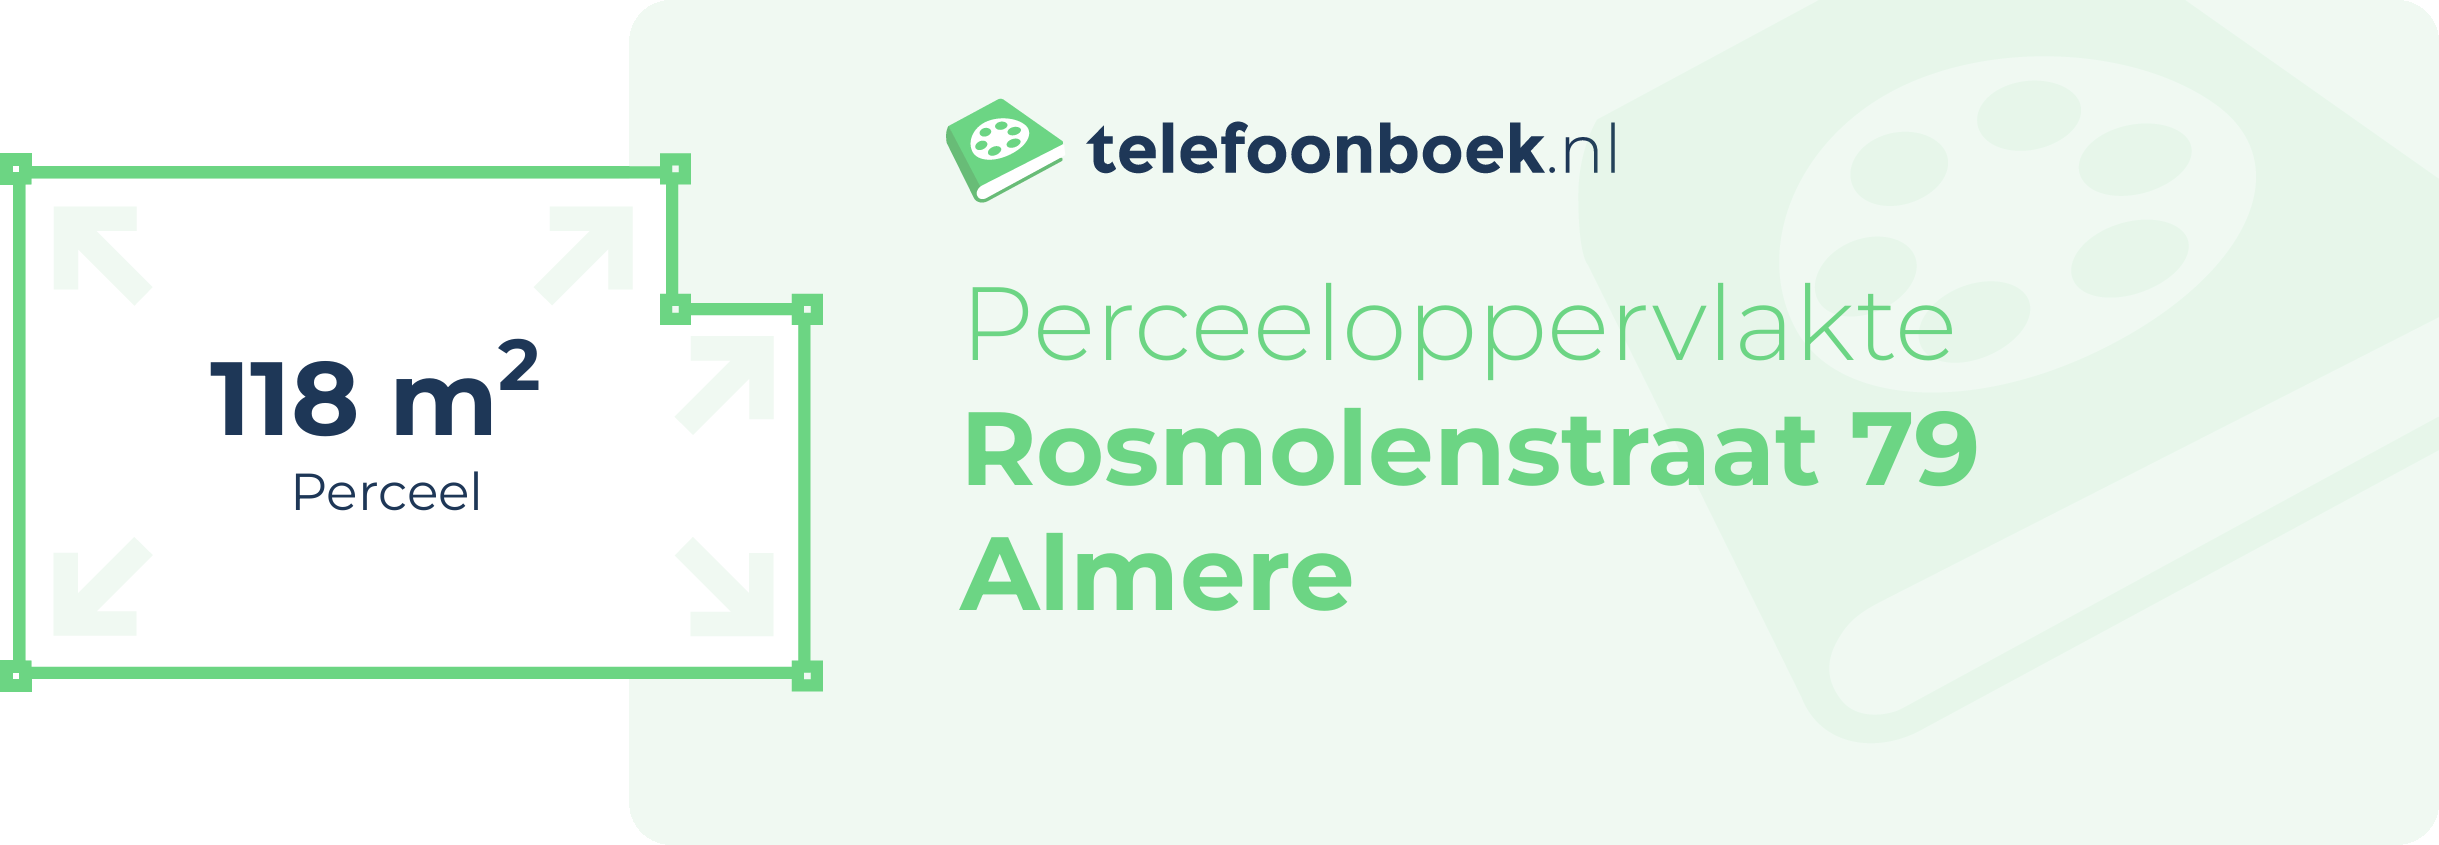 Perceeloppervlakte Rosmolenstraat 79 Almere